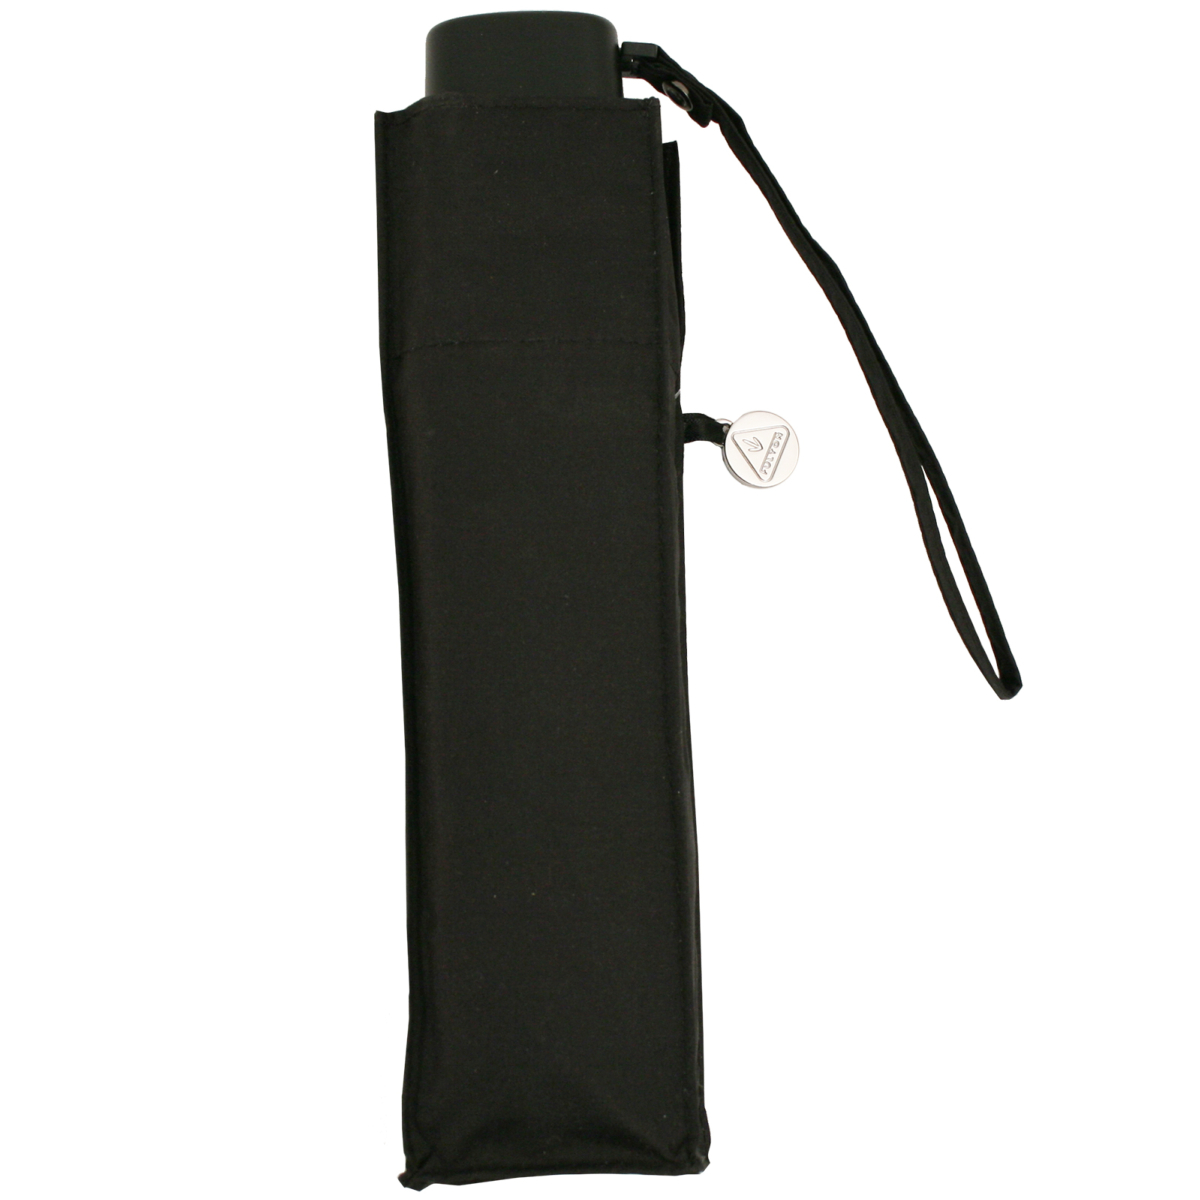 Fulton Miniflat Lightweight Folding Umbrella - Black